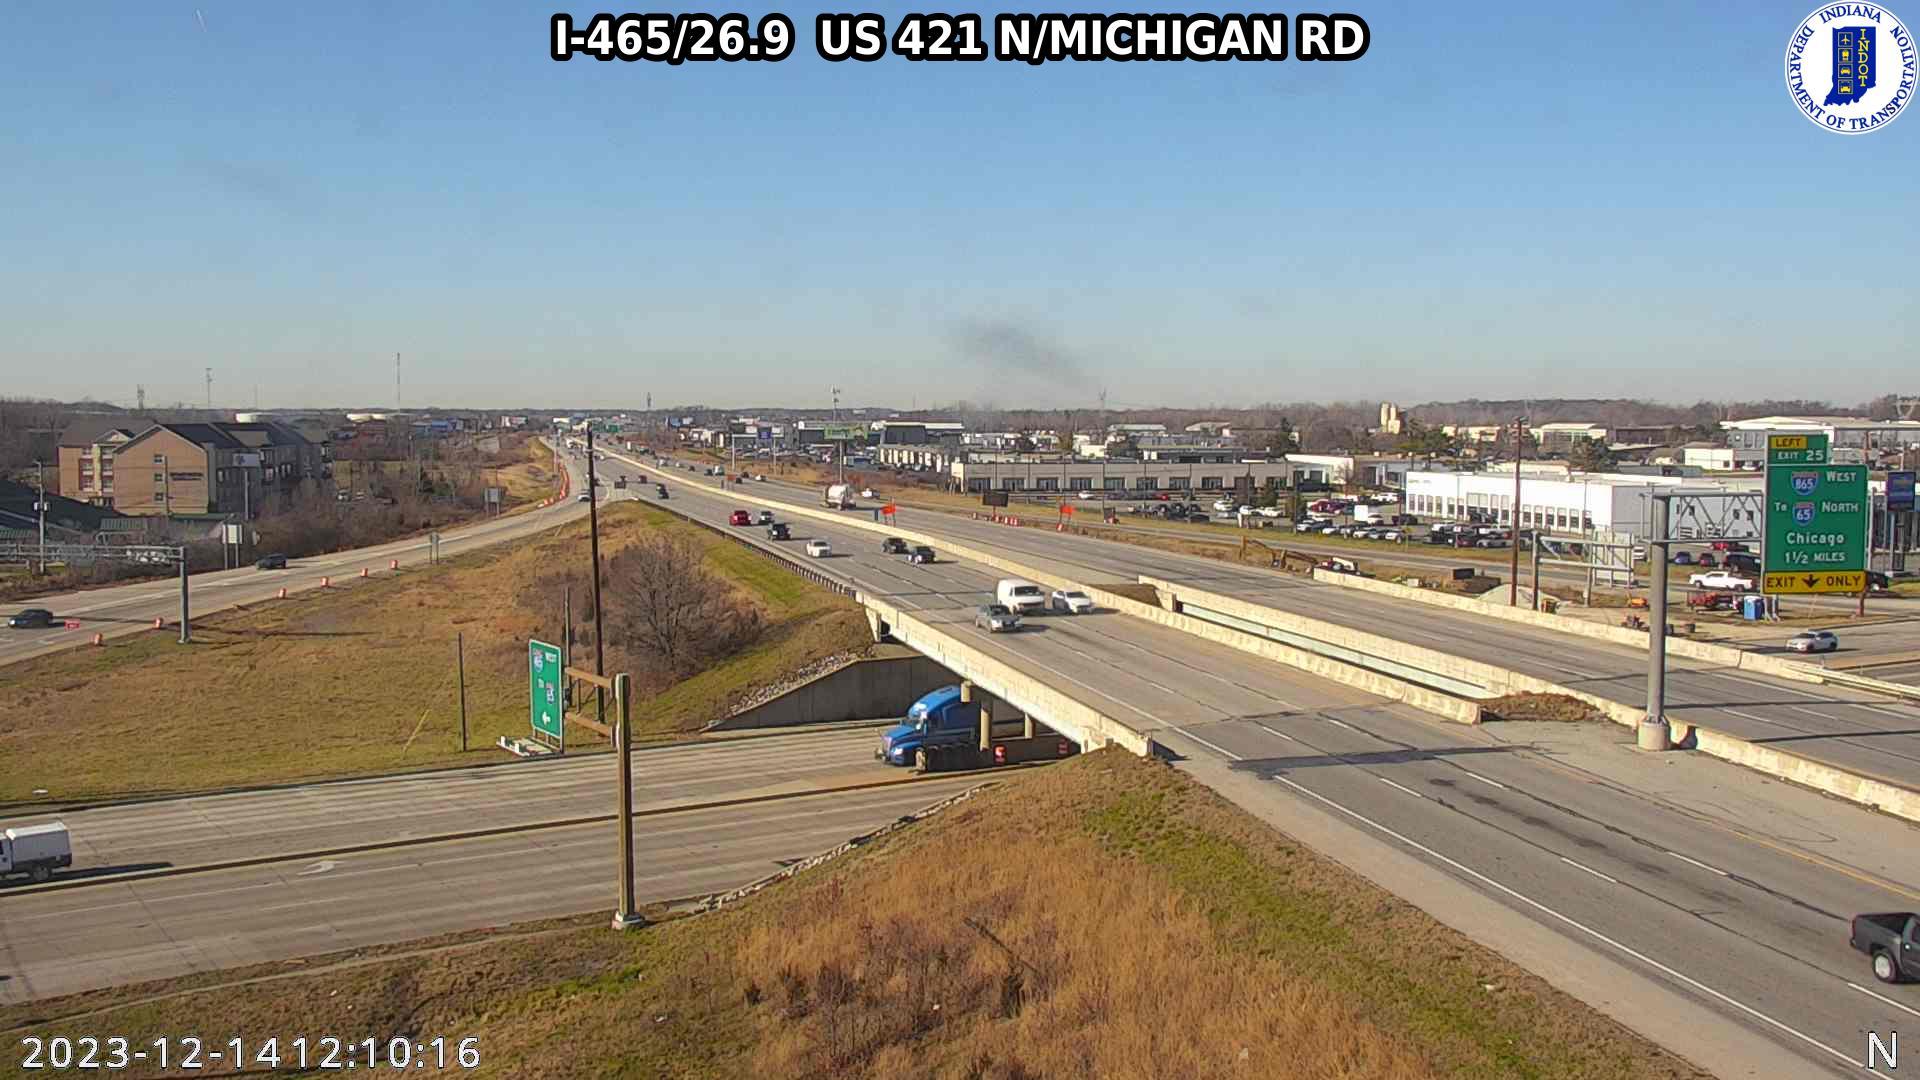 Traffic Cam Indianapolis: I-465: I-465/26.9 US 421 N/MICHIGAN RD Player